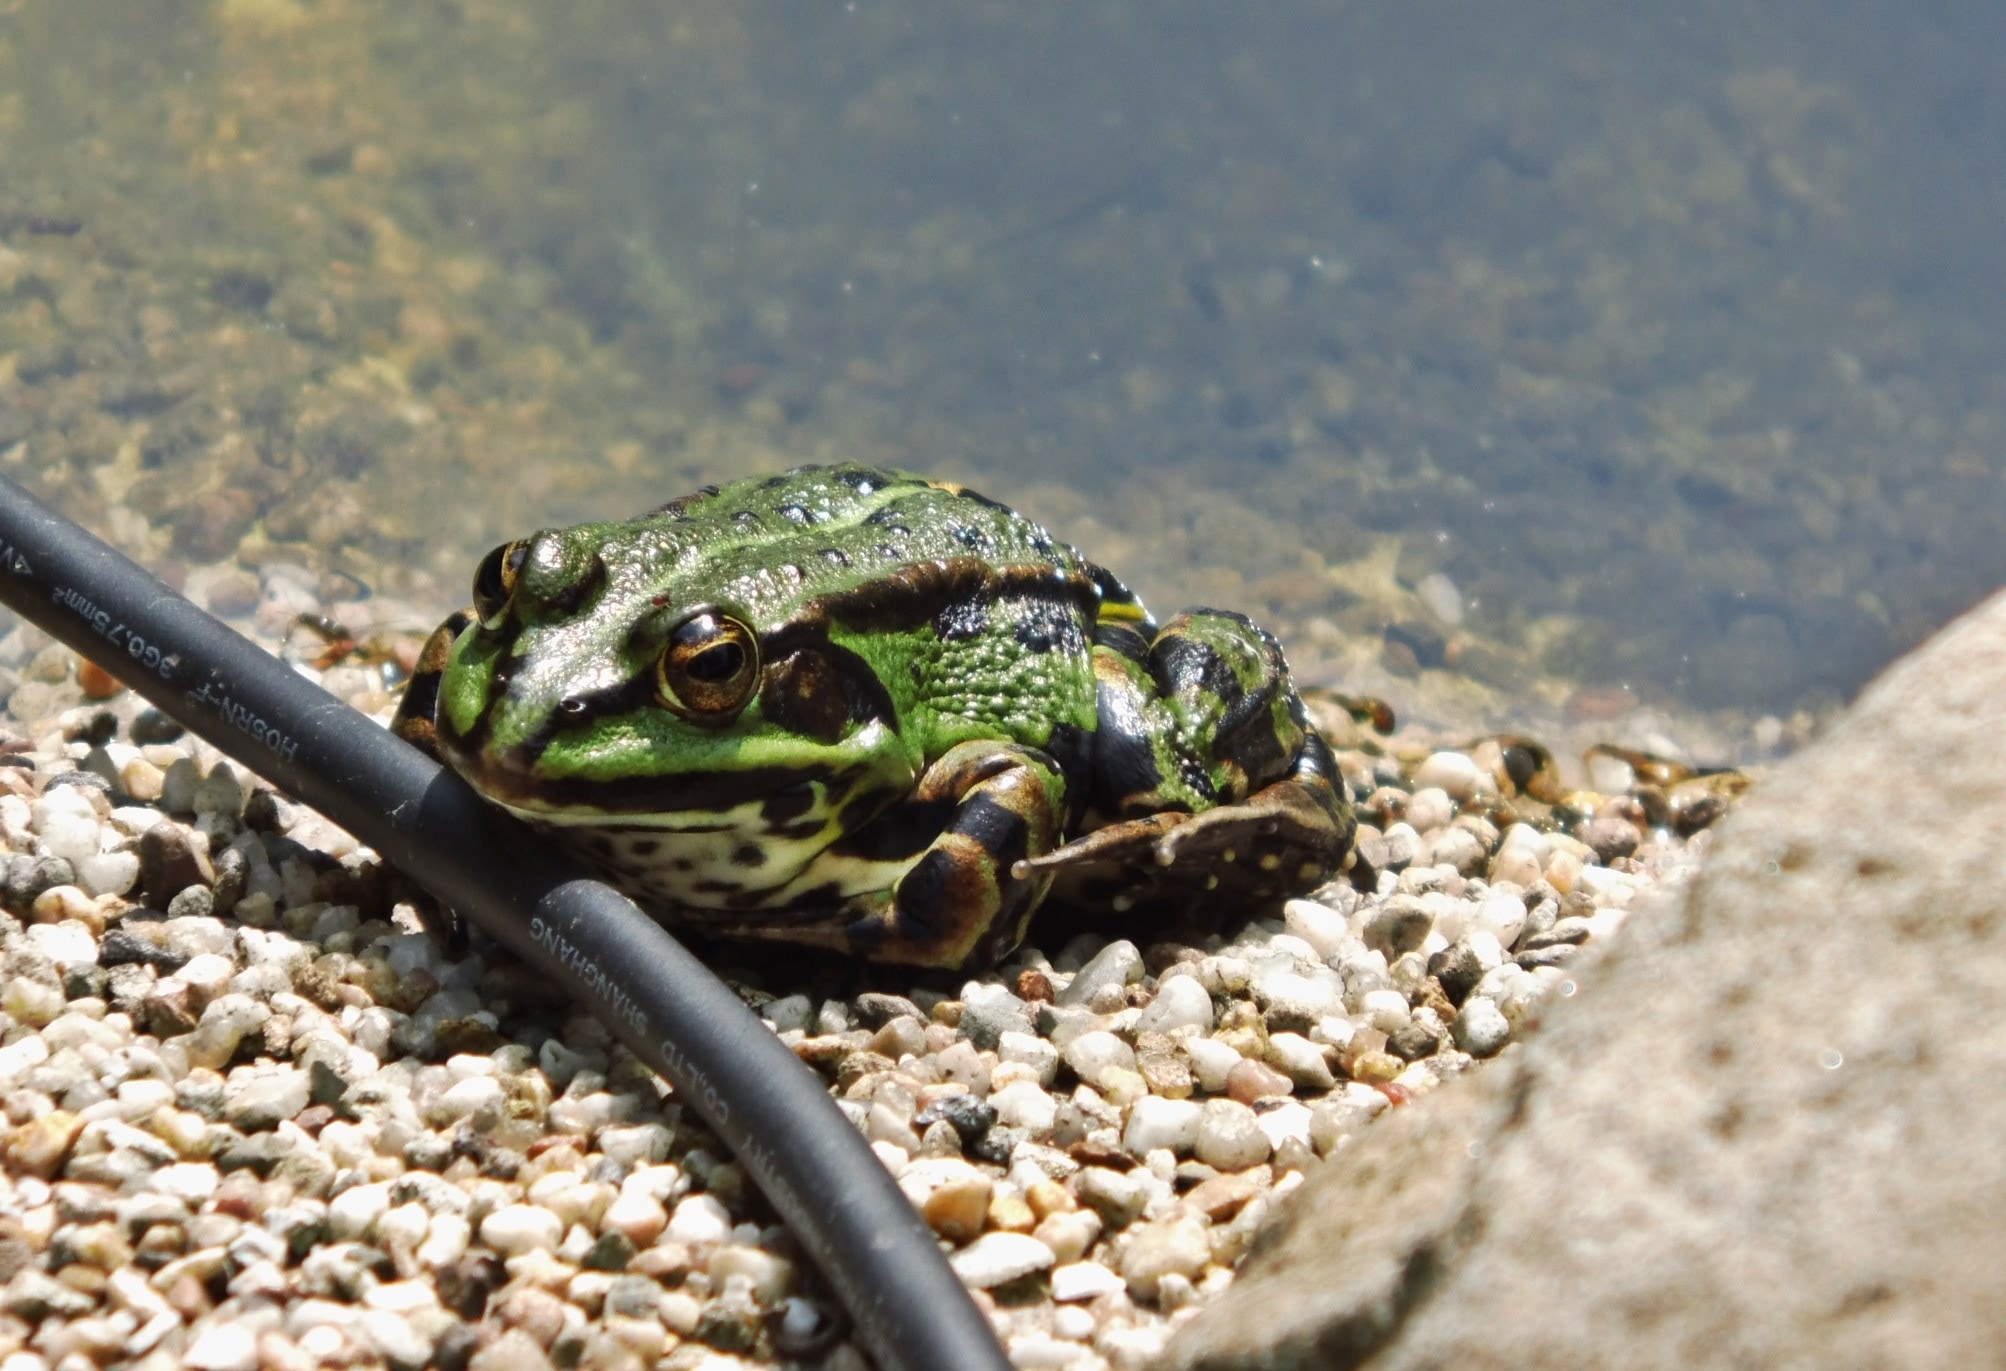 Frog, Pond, Garden Pond, Toad, Frog Pond, one animal, animal themes